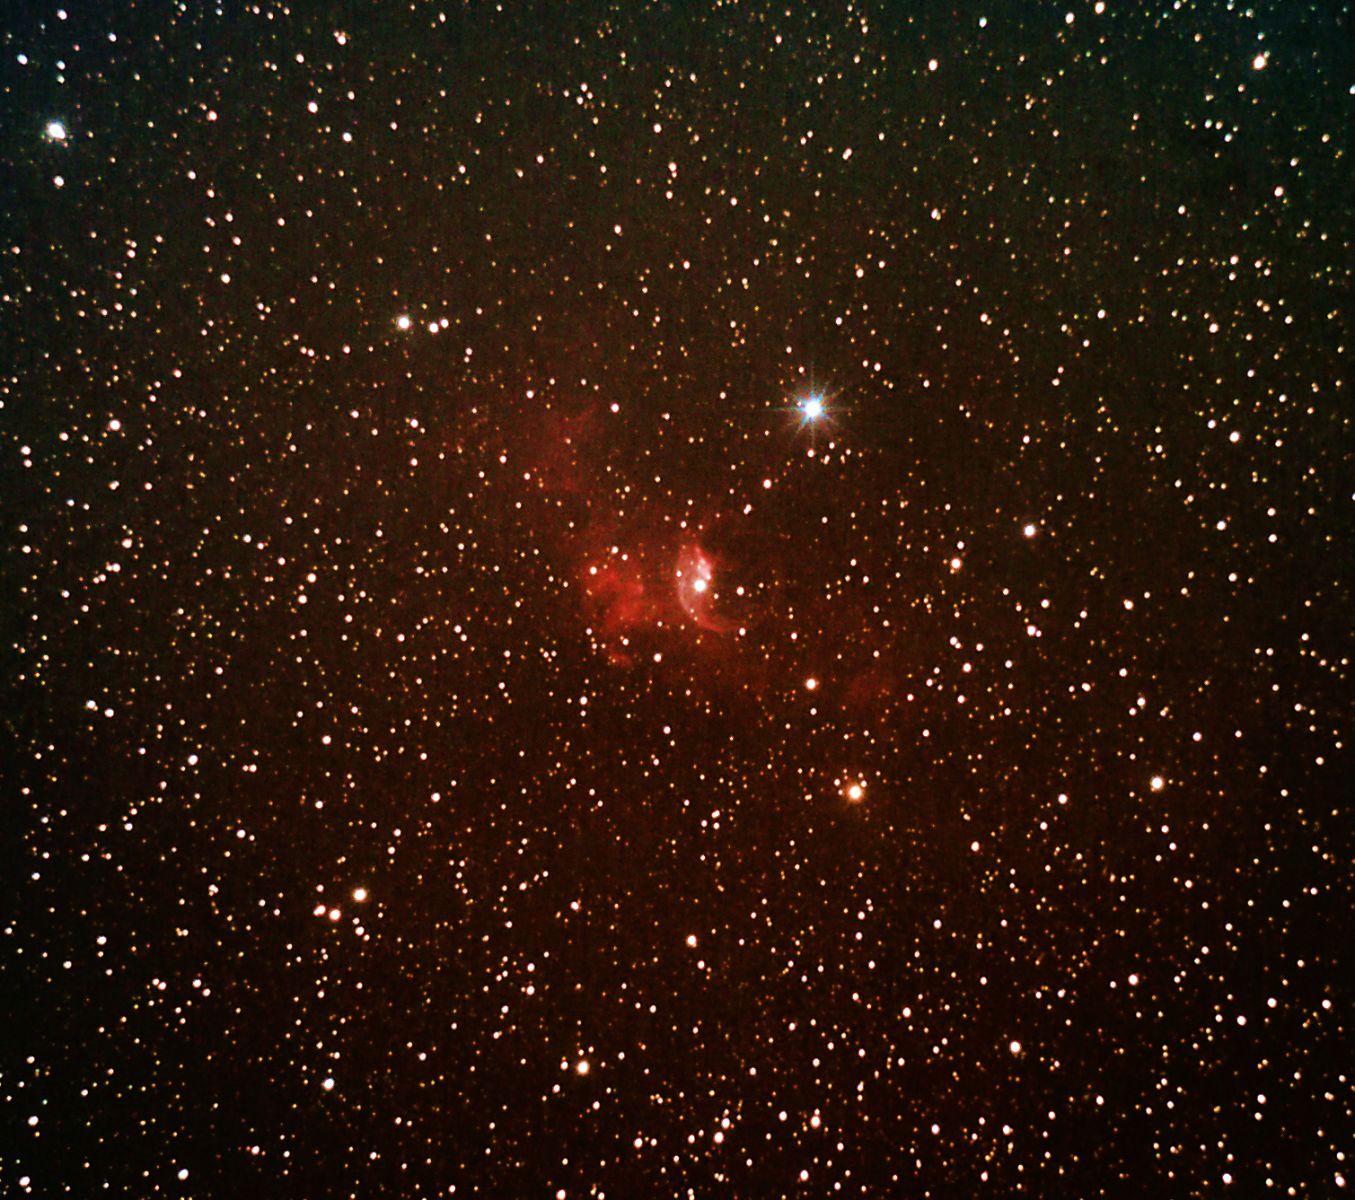 More Bubble Nebula